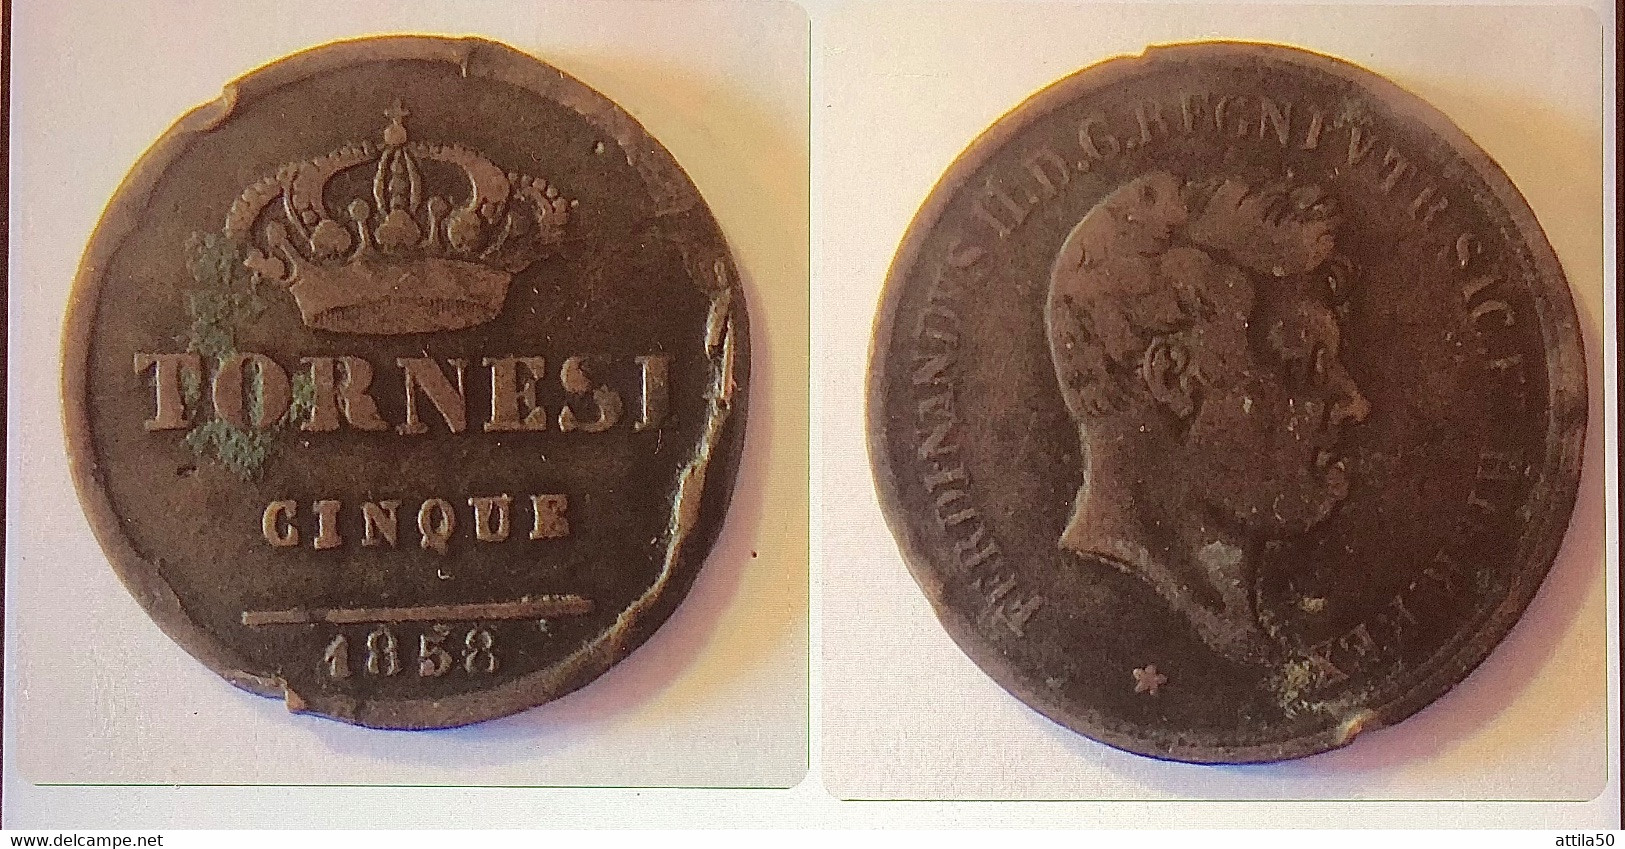 NAPOLI- Ferdinando II Di BORBONE- TORNESI CINQUE 1858 - NC. - Deux Siciles